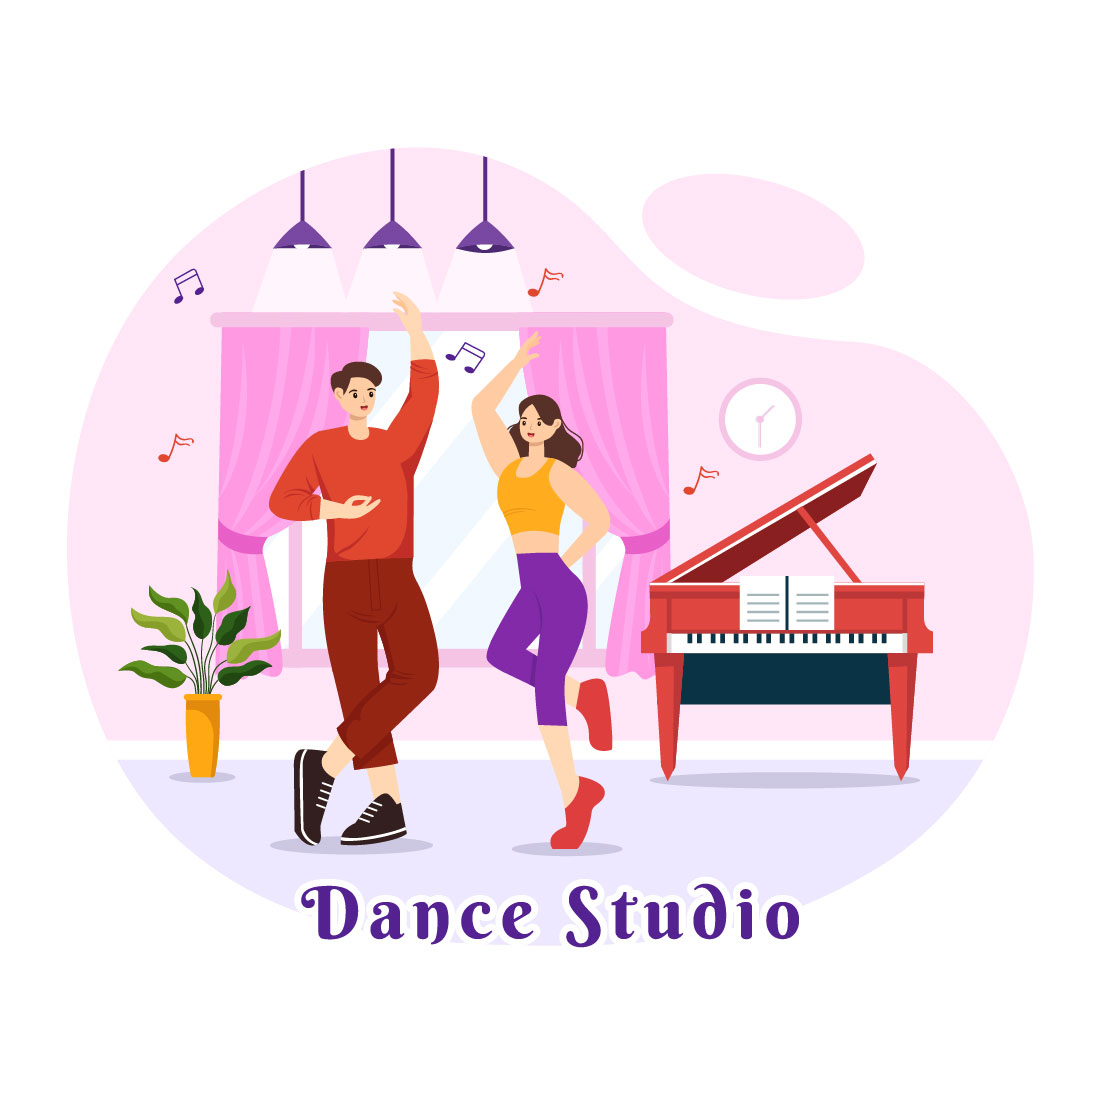 12 Dance Studio Illustration cover image.